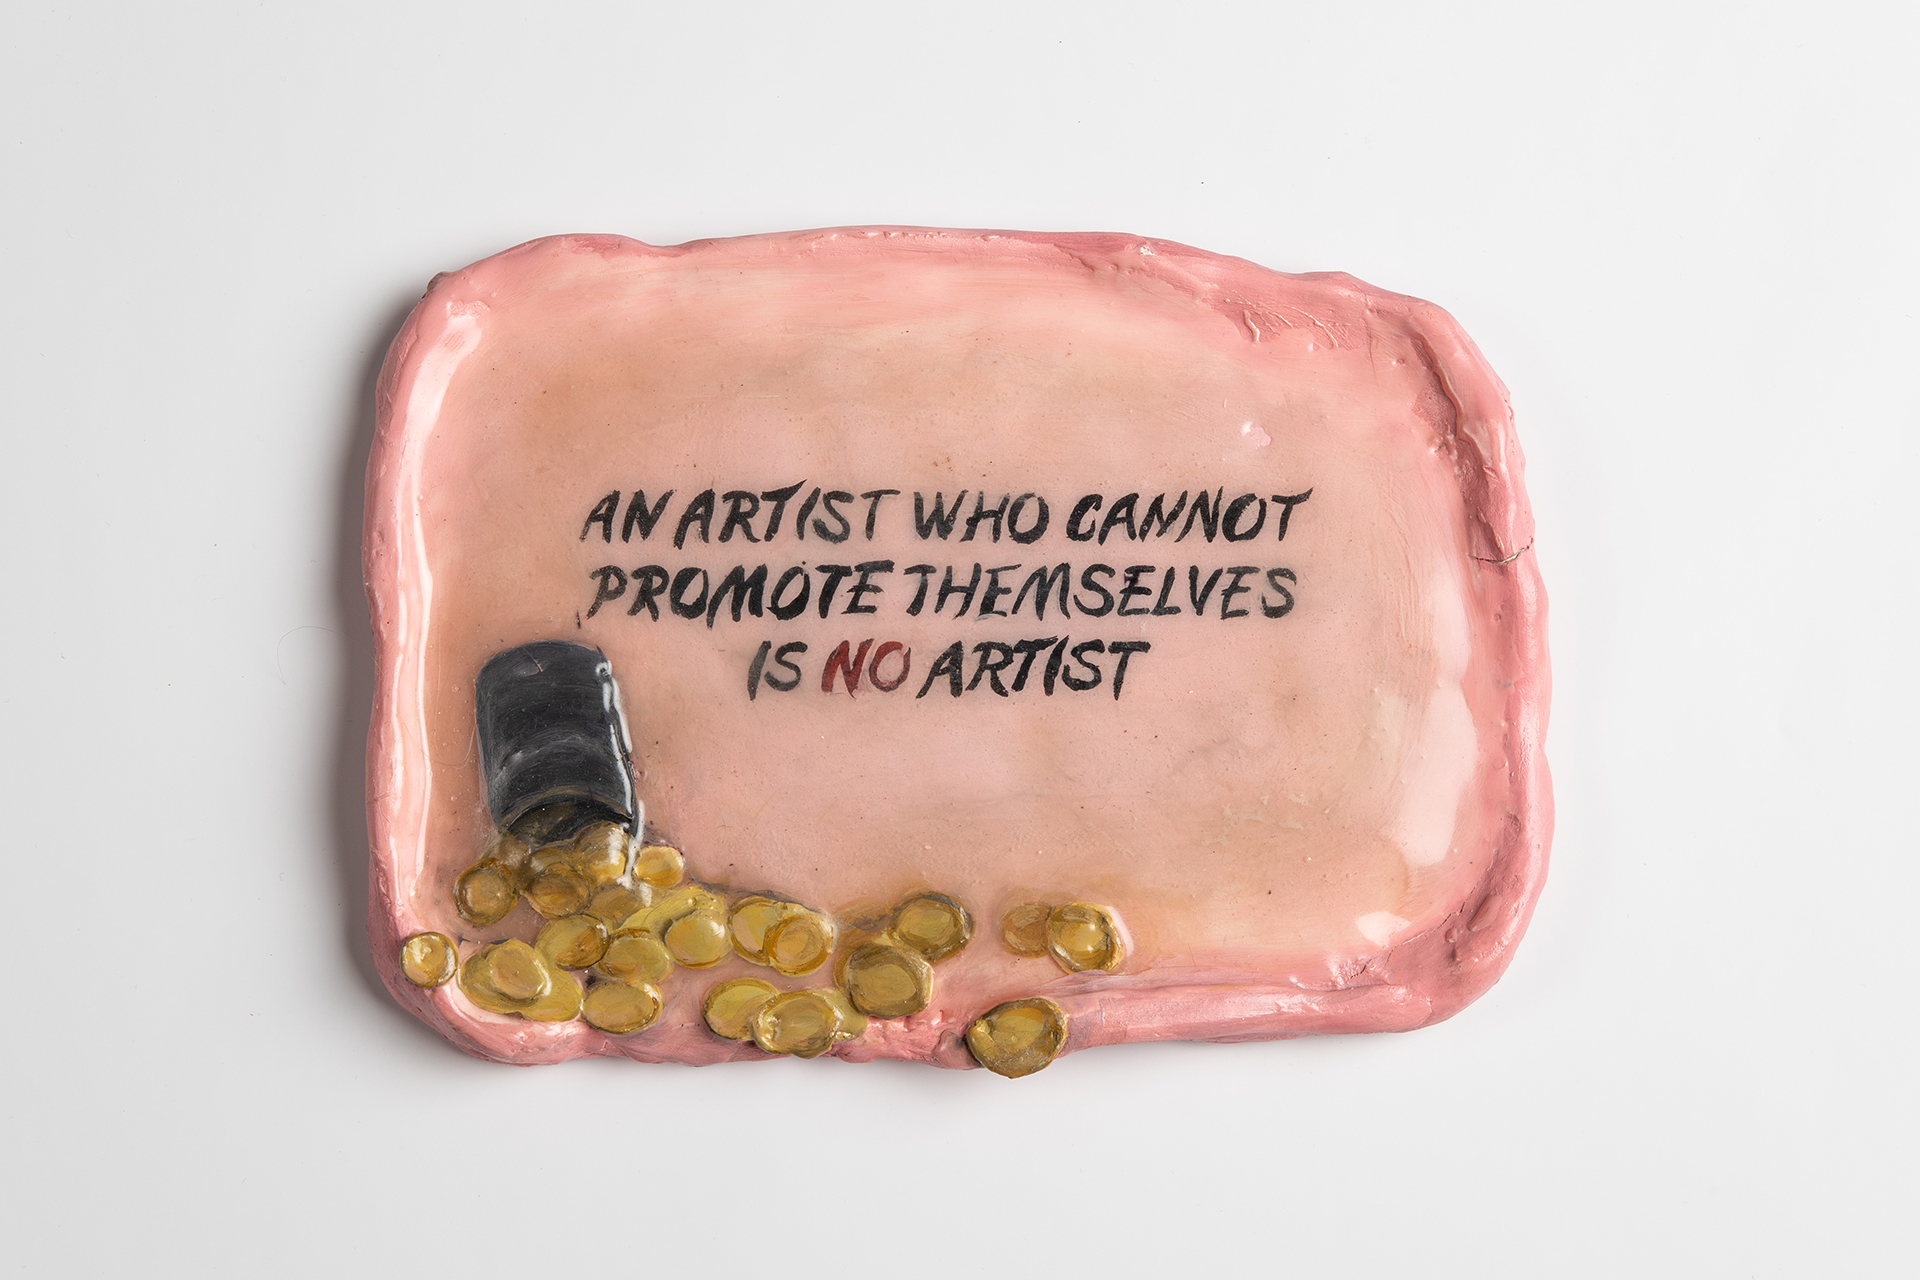 Magnes z grafiką przedstawiającą monety i z napisem “An artist who cannot promoute themselves is not an artist”